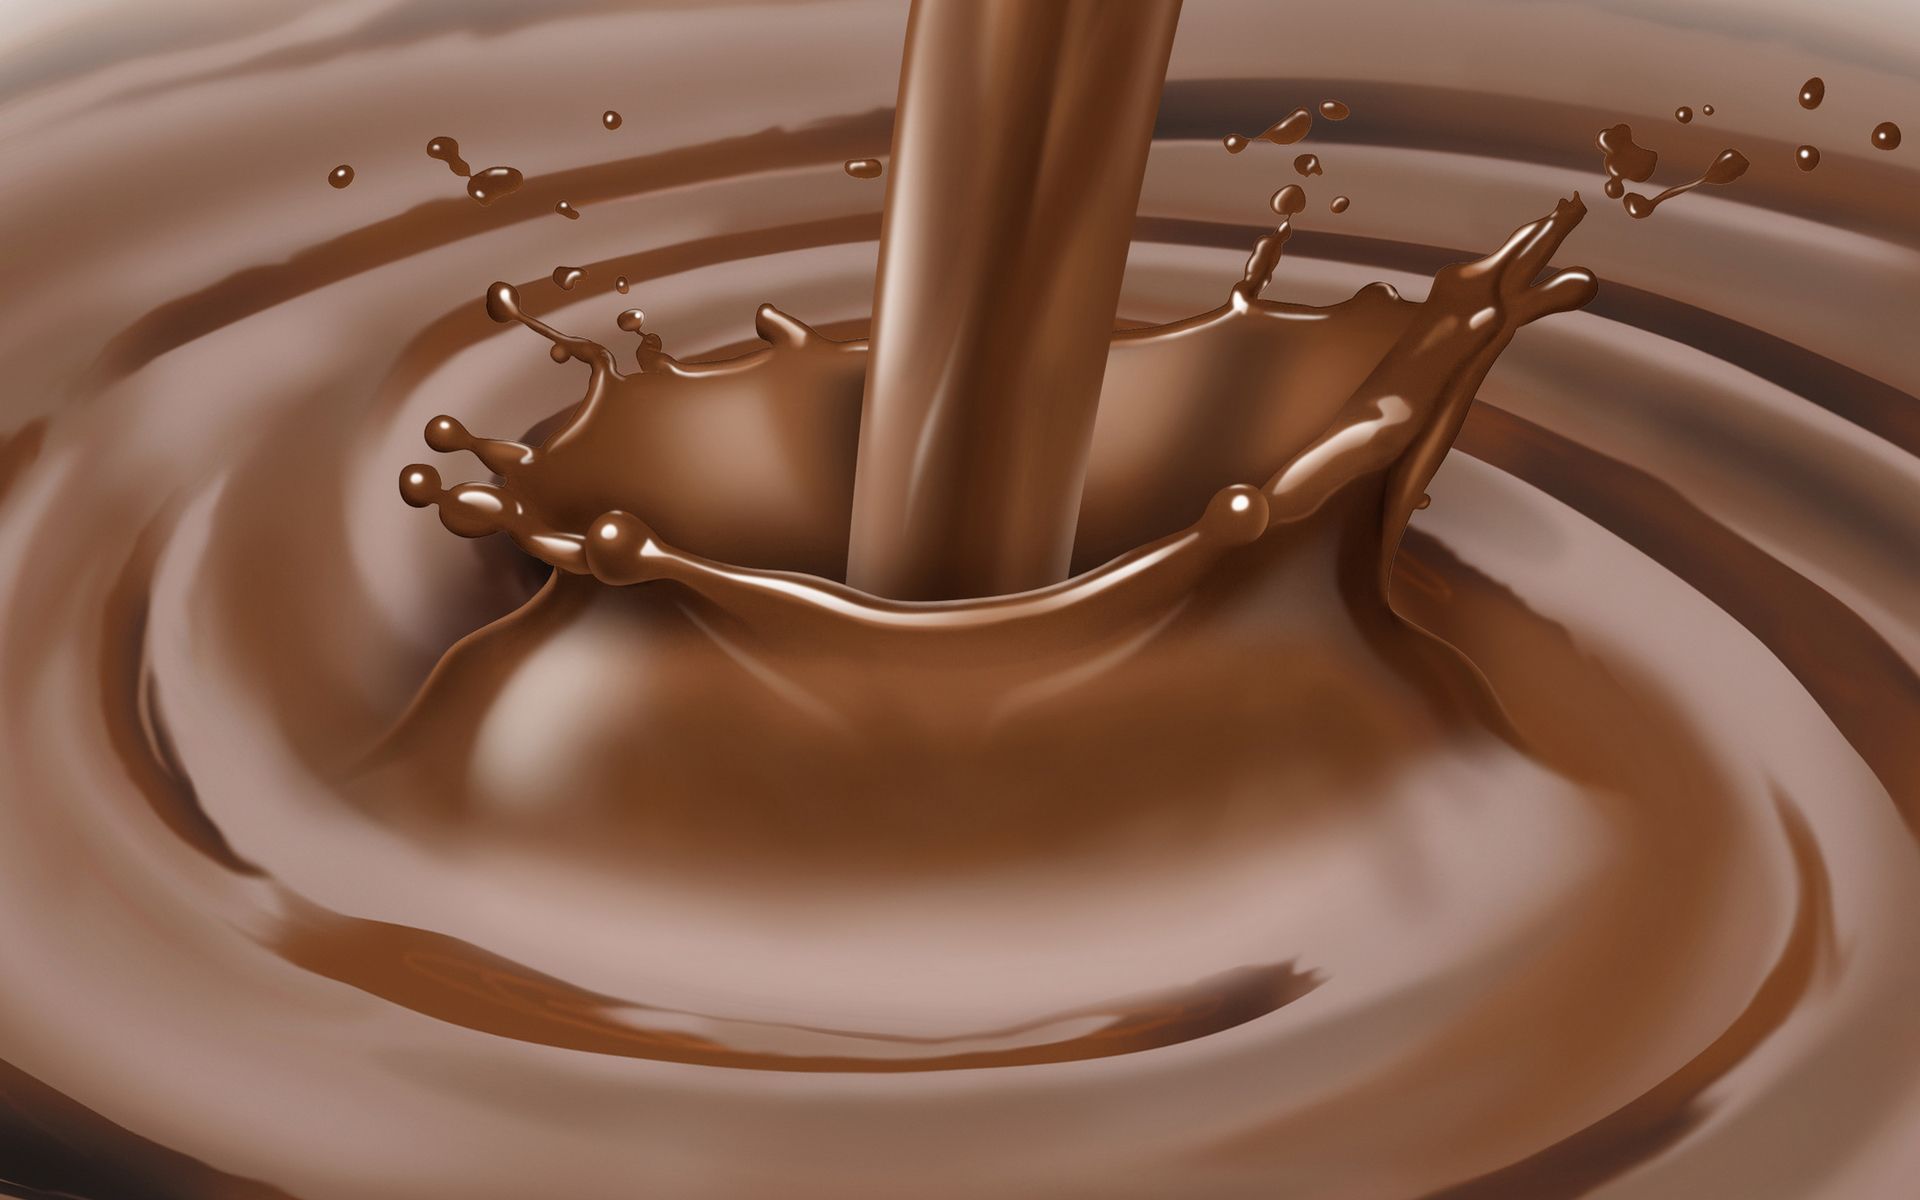 Download wallpaper: liquid, hot Chocolate, hot chocolate, download photo, wallpaper for desktop